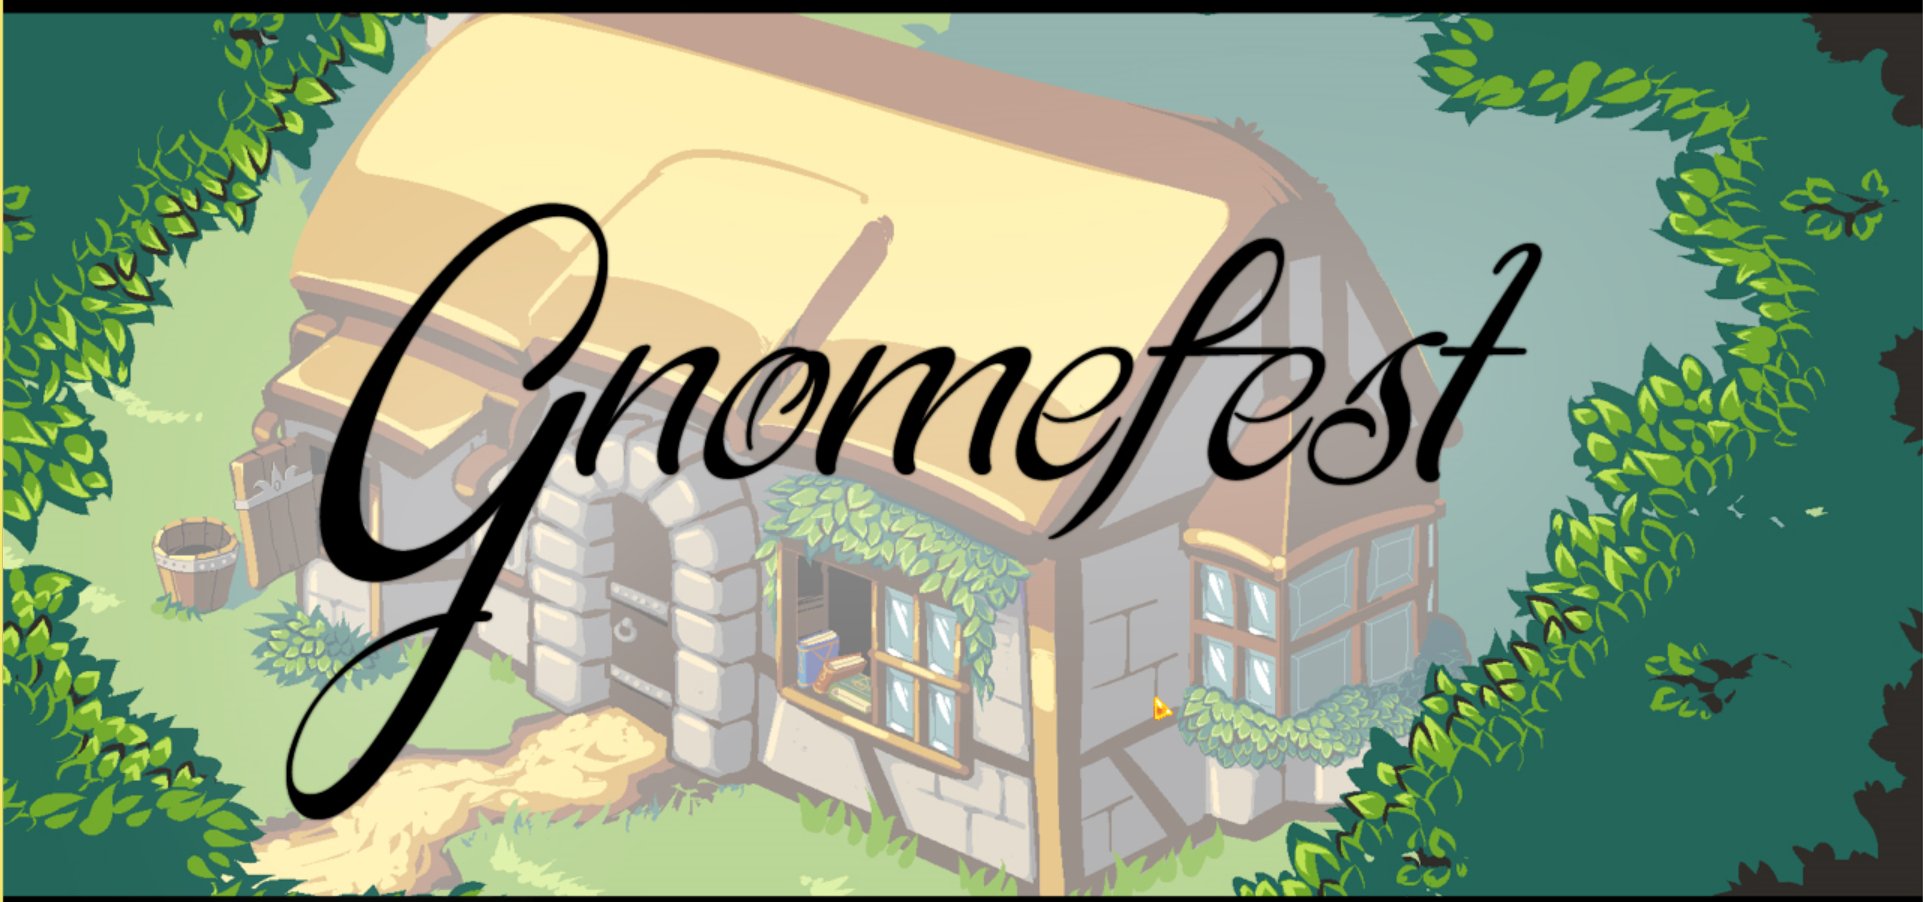 Gnomefest